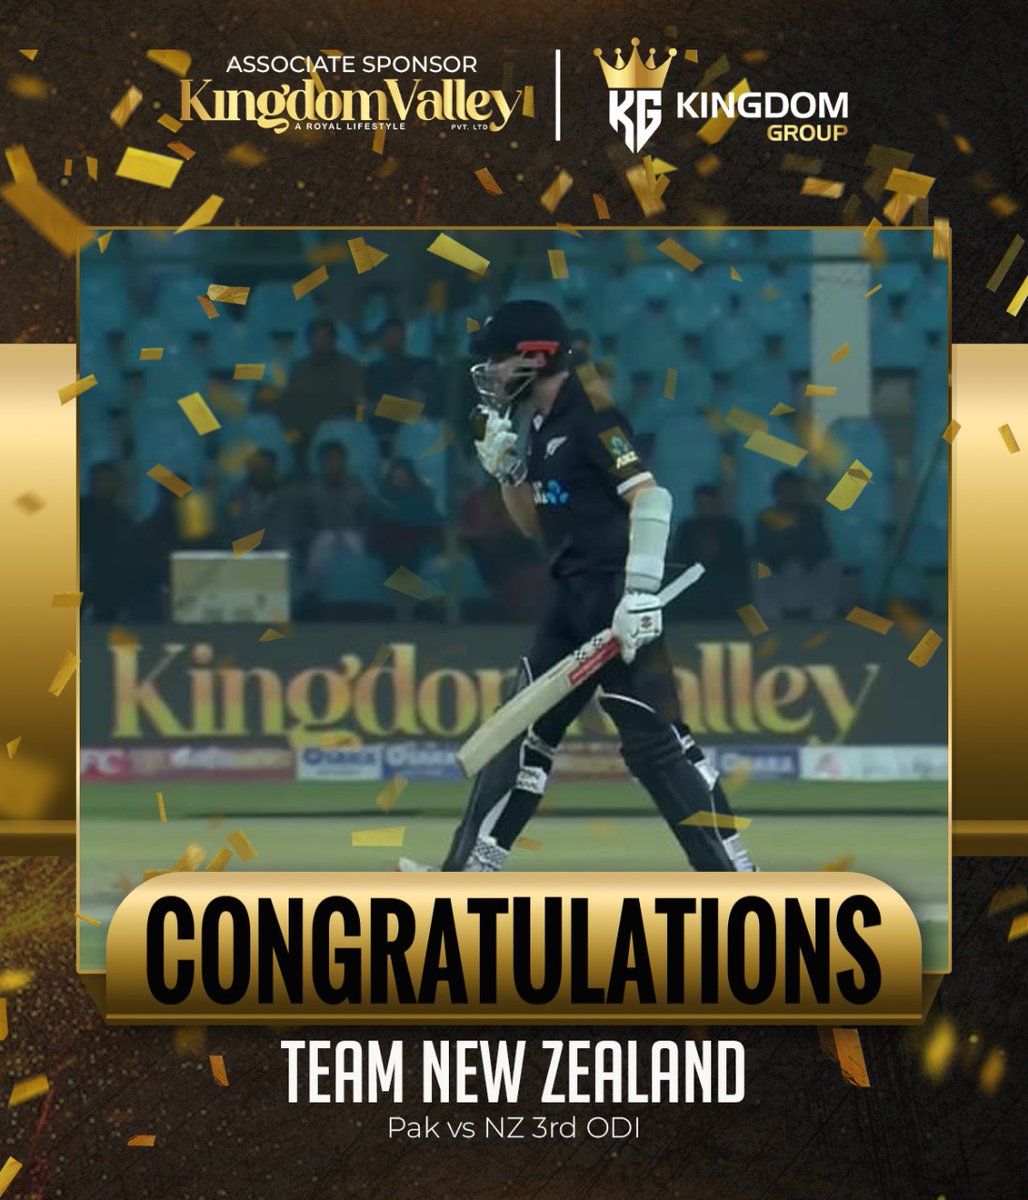 Kingdom Group congratulates the New Zealand Cricket Team for winning the third and final Pak vs NZ ODI match of the series.
#KingdomValley #KingdomGroup #PakvsNZ #ODI #PCB #PakistanCricket #HomeSeries #AssociateSponsor #NewZealand #ICC #PSL #shahidAfirid #HNO #NewZealandEmbassy